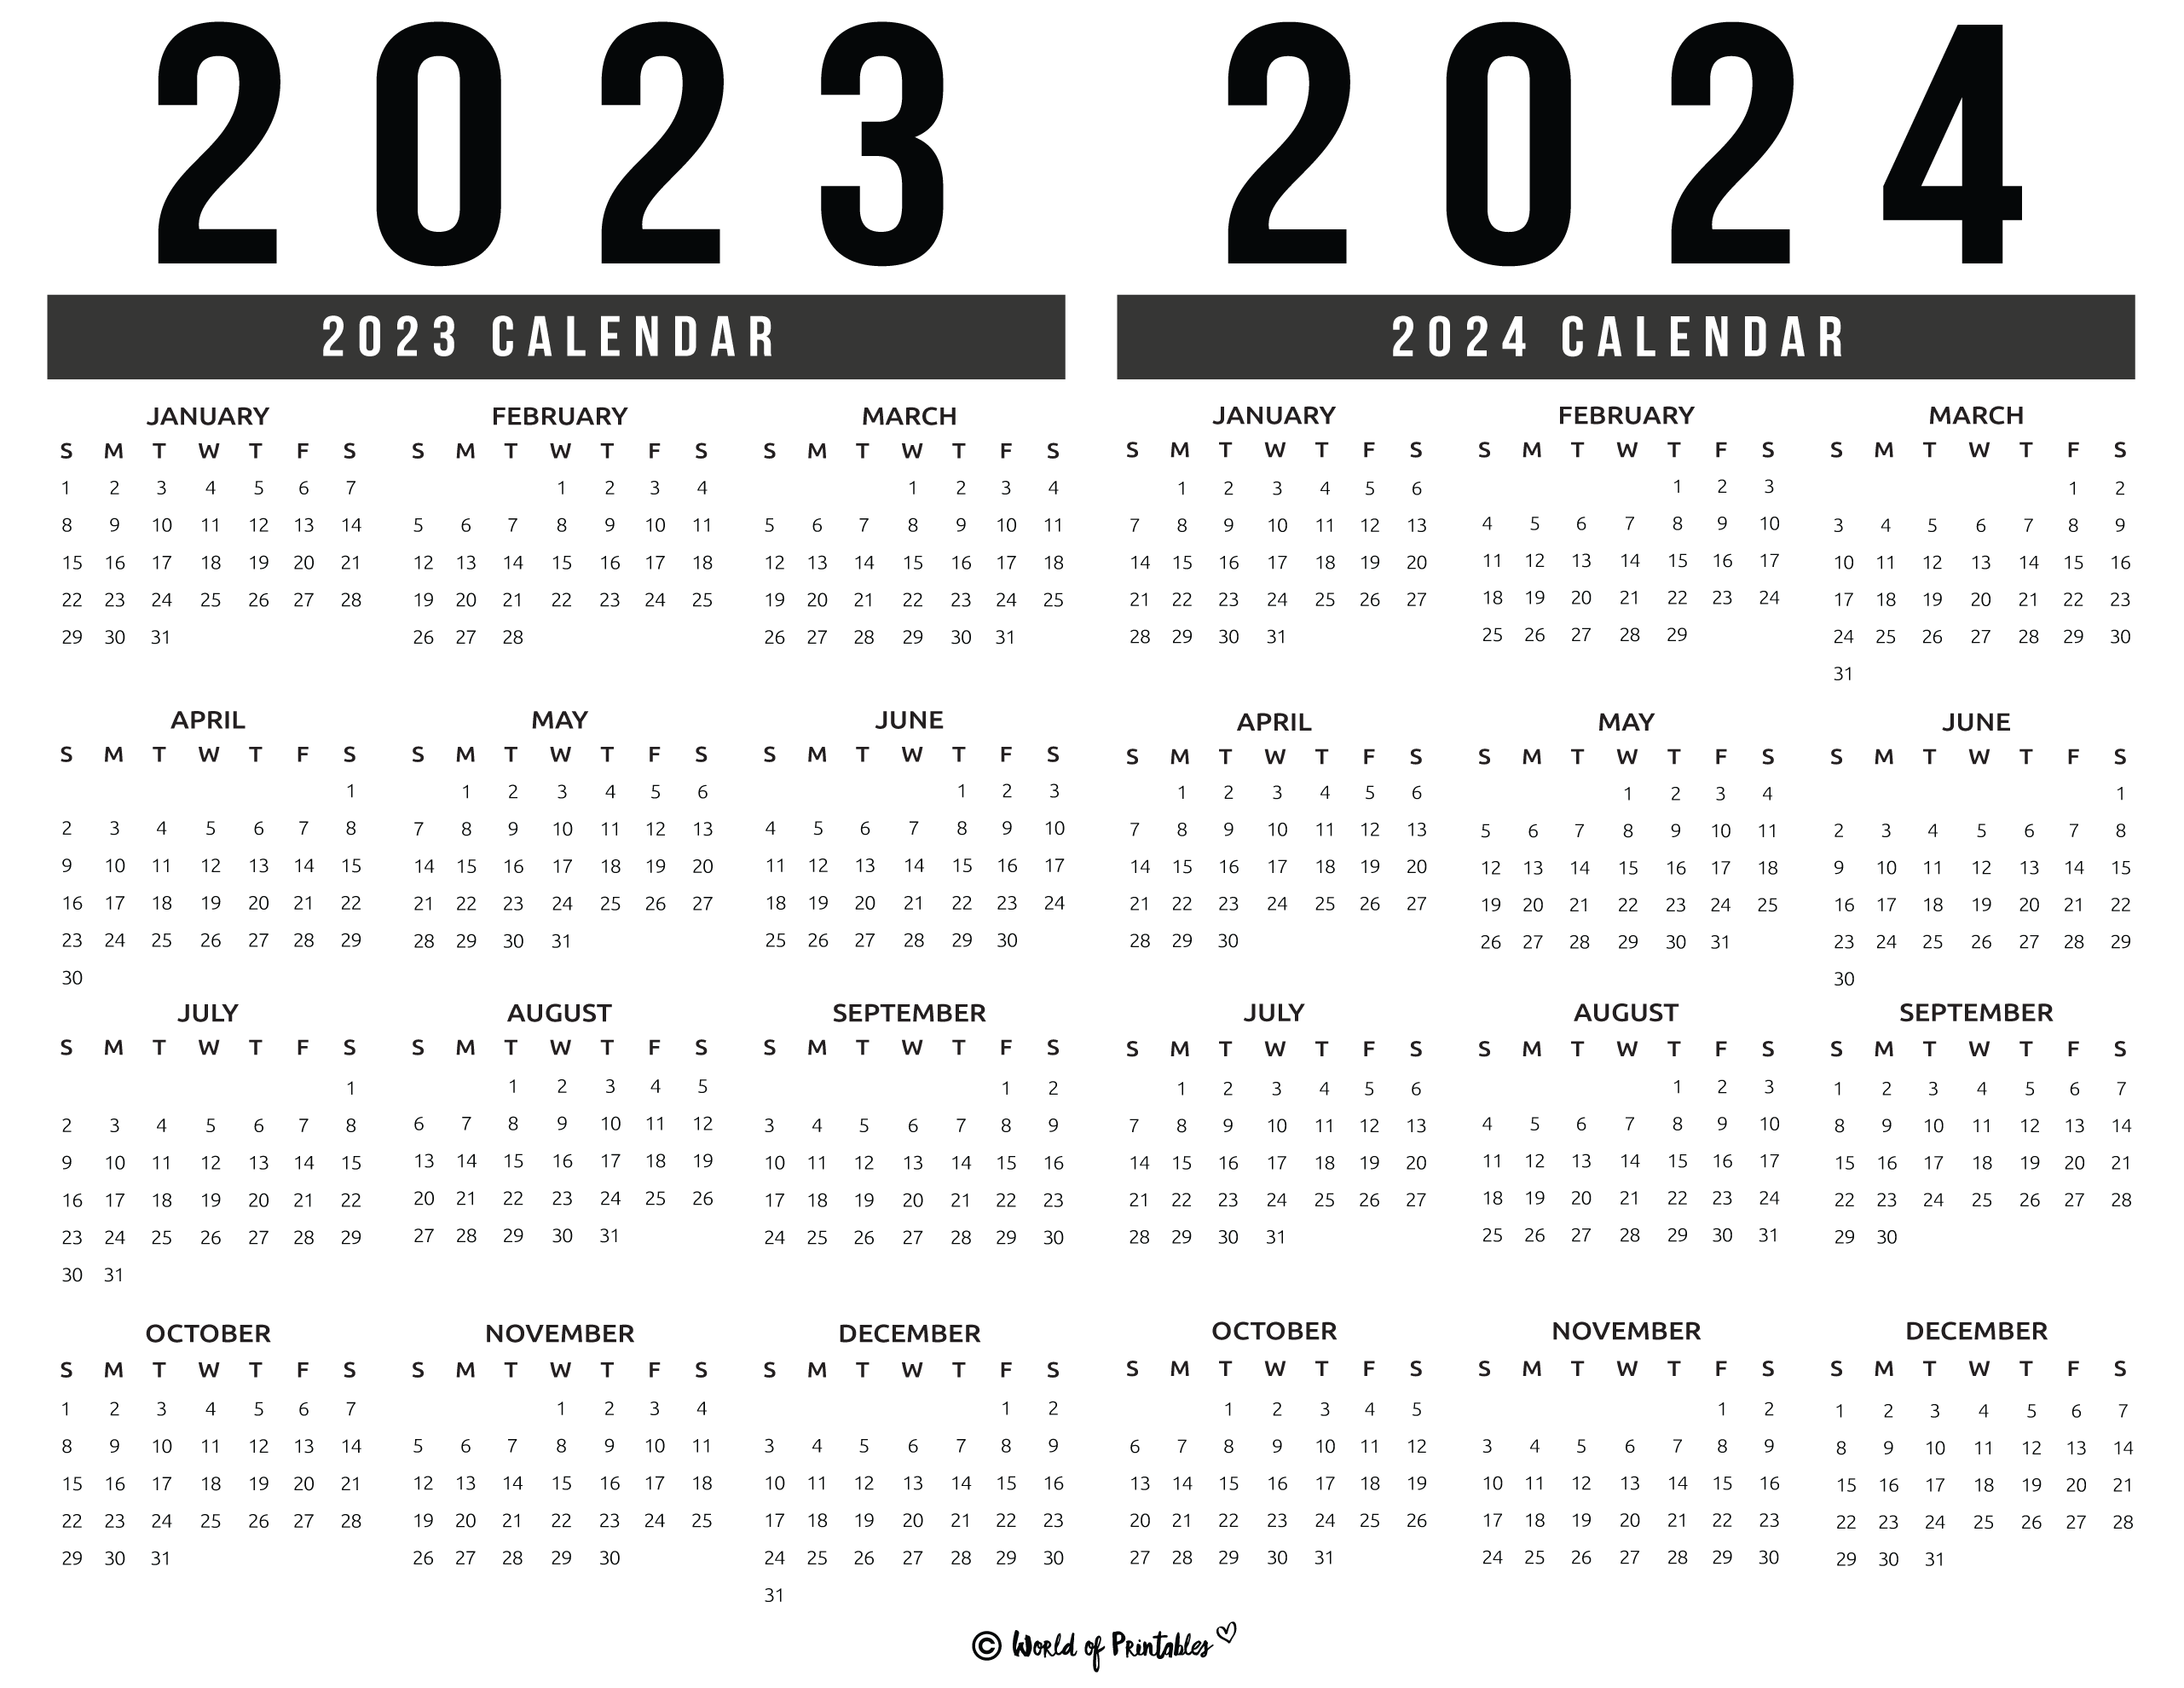 2023 2024 Calendar Free Printables - World Of Printables for Yearly Calendar 2023 And 2024 Printable